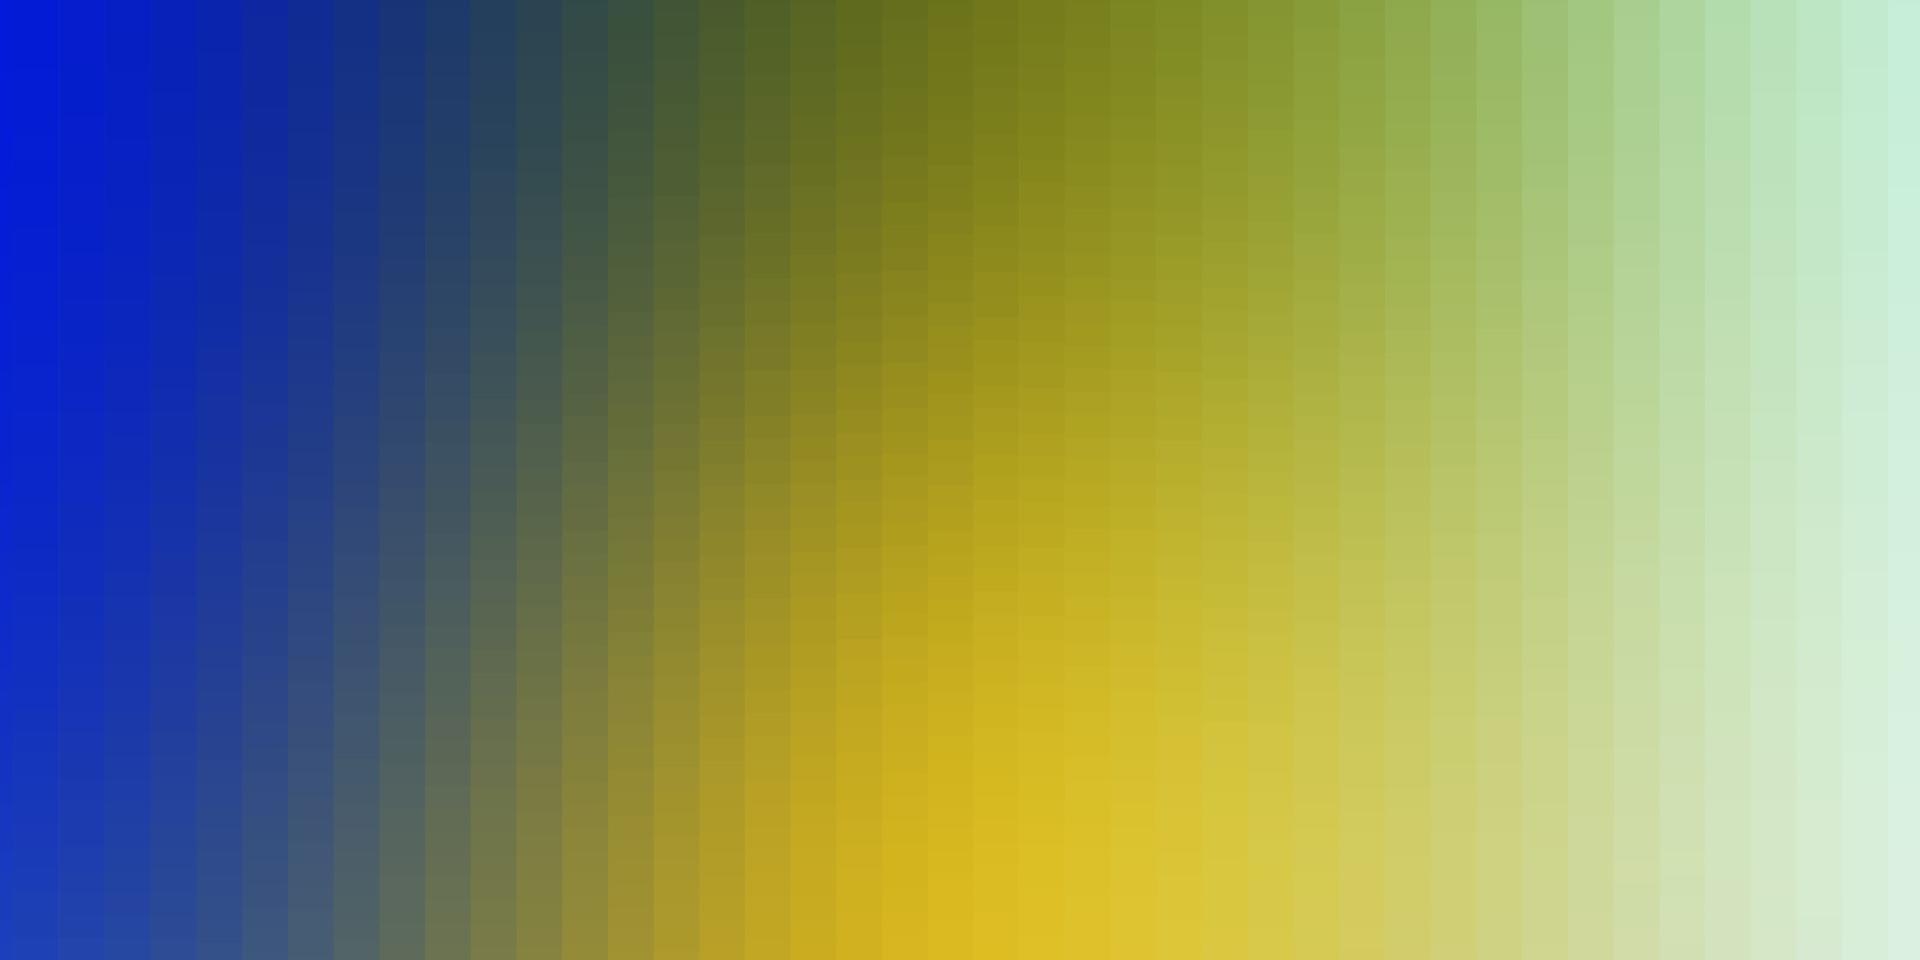 Light Blue, Yellow vector texture in rectangular style.